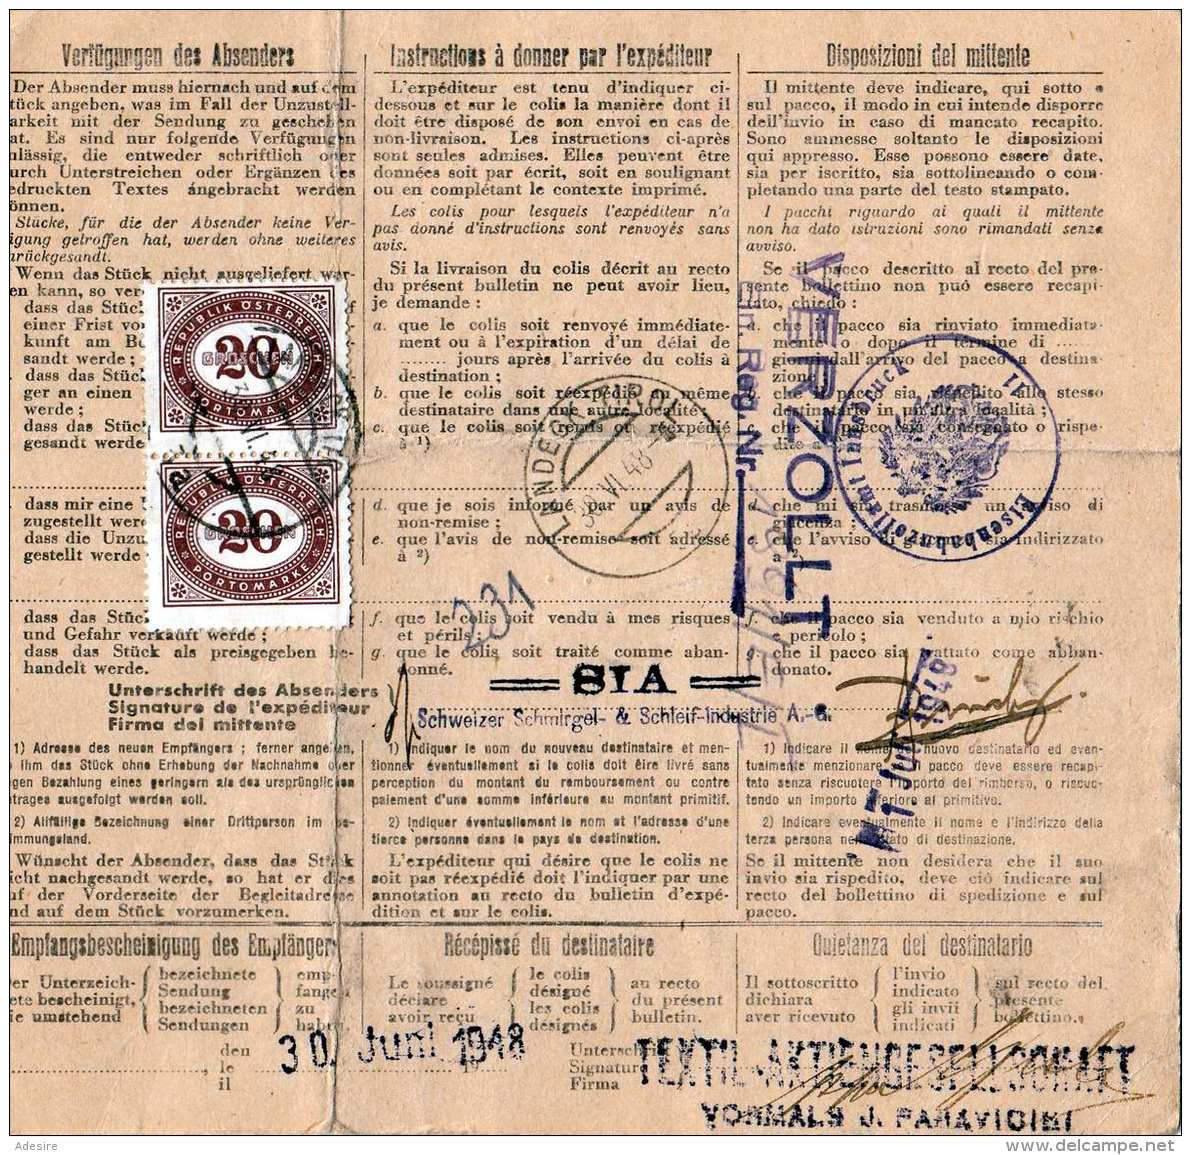 ÖSTERREICH NACHPORTO 1948 - 2 X 20 Gro Nachporto Auf Paketkarte Gel.v. Buchs Schweiz > Tirol Stempel Frauenfeld ... - Portomarken